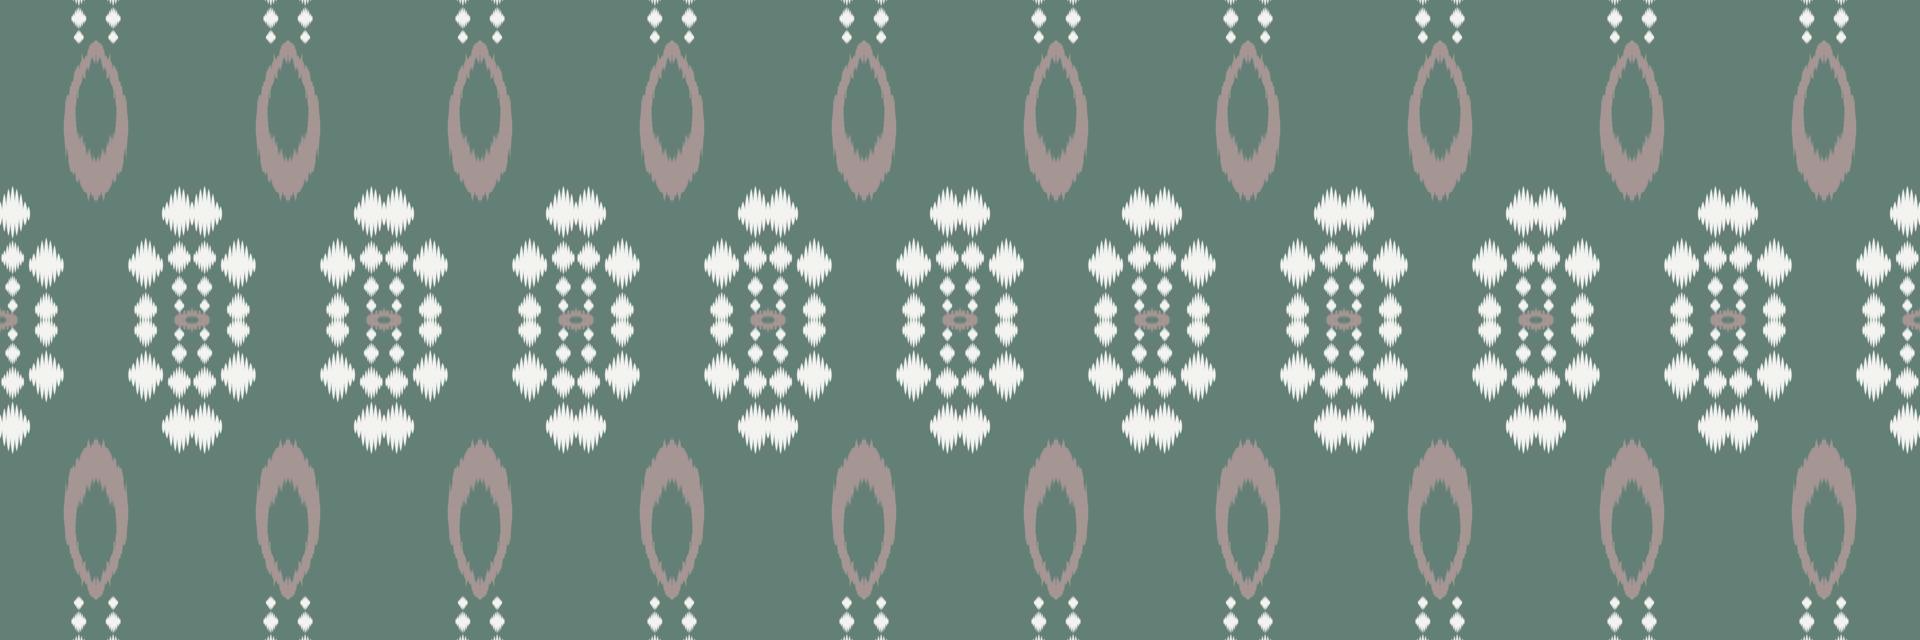 ikat sin costuras patrón abstracto tribal sin costuras. étnico geométrico batik ikkat vector digital diseño textil para estampados tela sari mogol cepillo símbolo franjas textura kurti kurtis kurtas